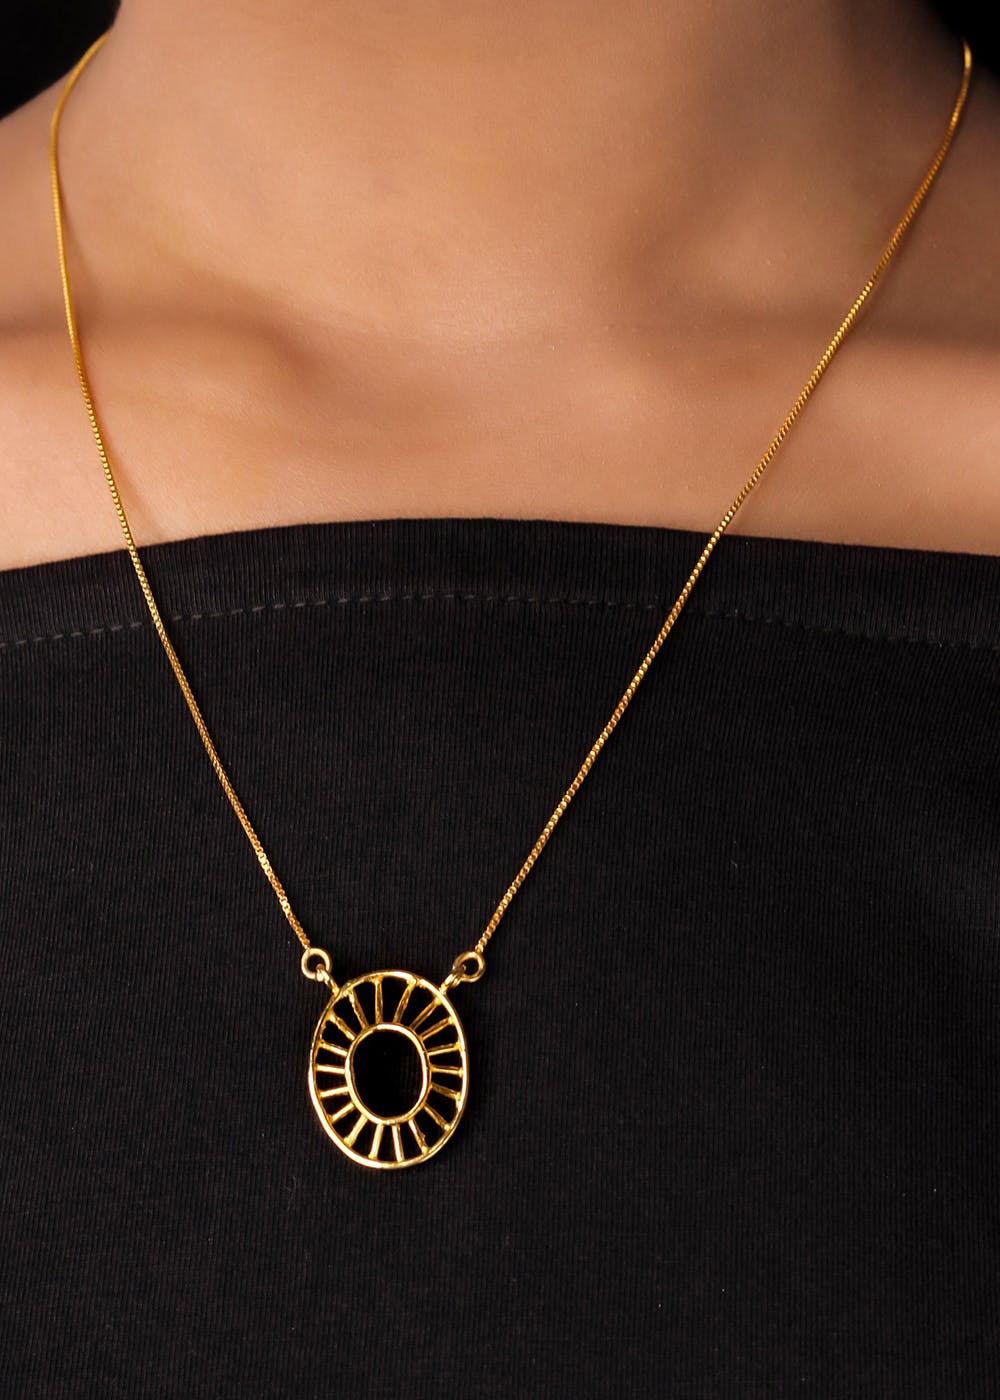 Gold Oval Dainty Necklace